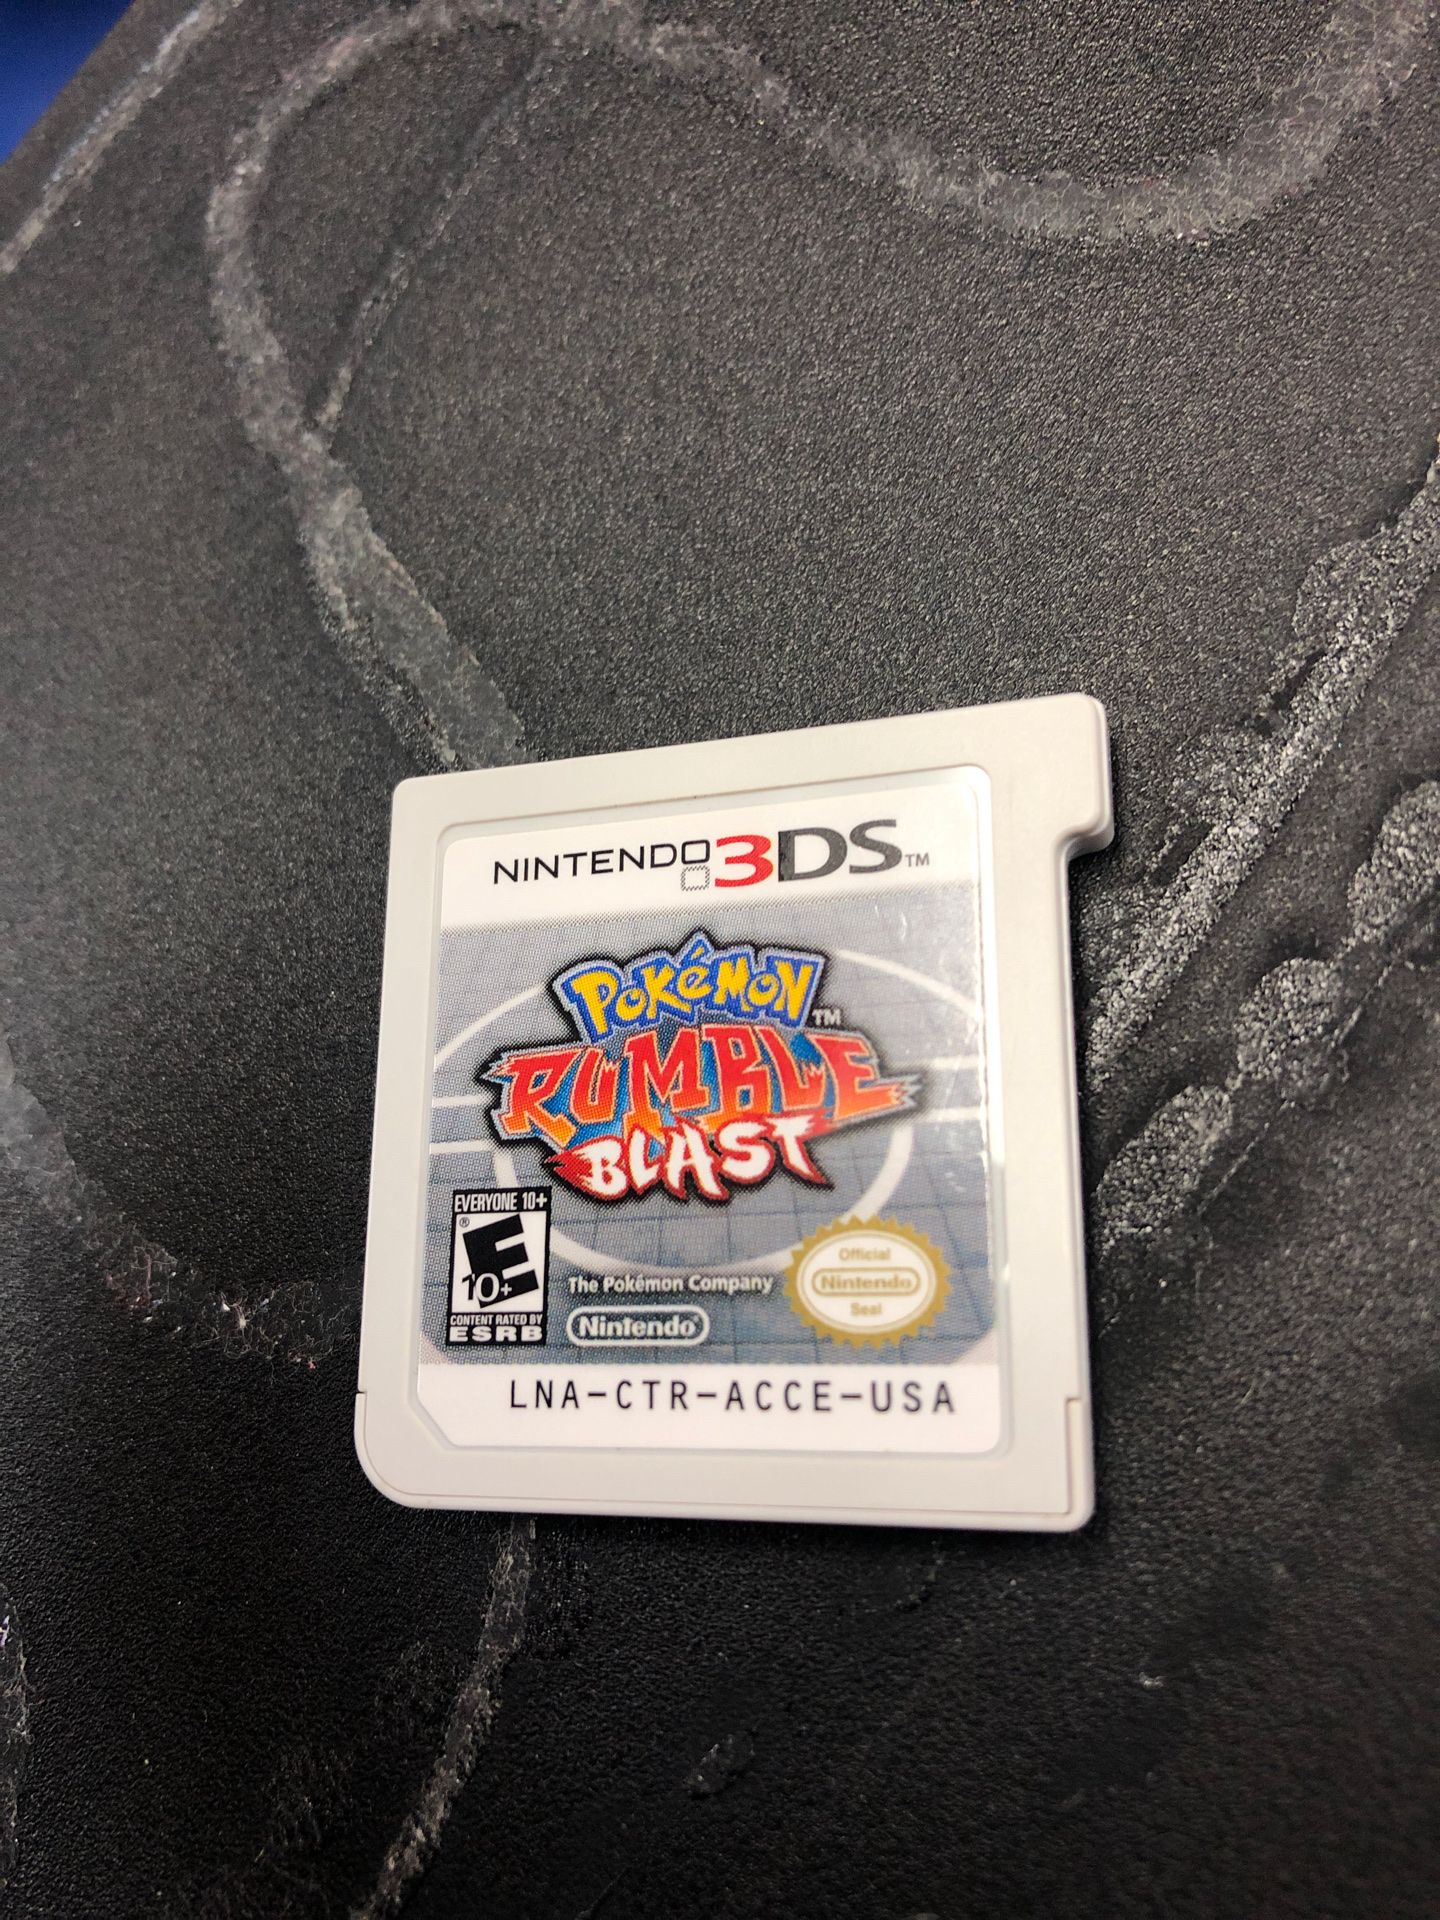 Nintendo 3ds Pokémon rumble blast